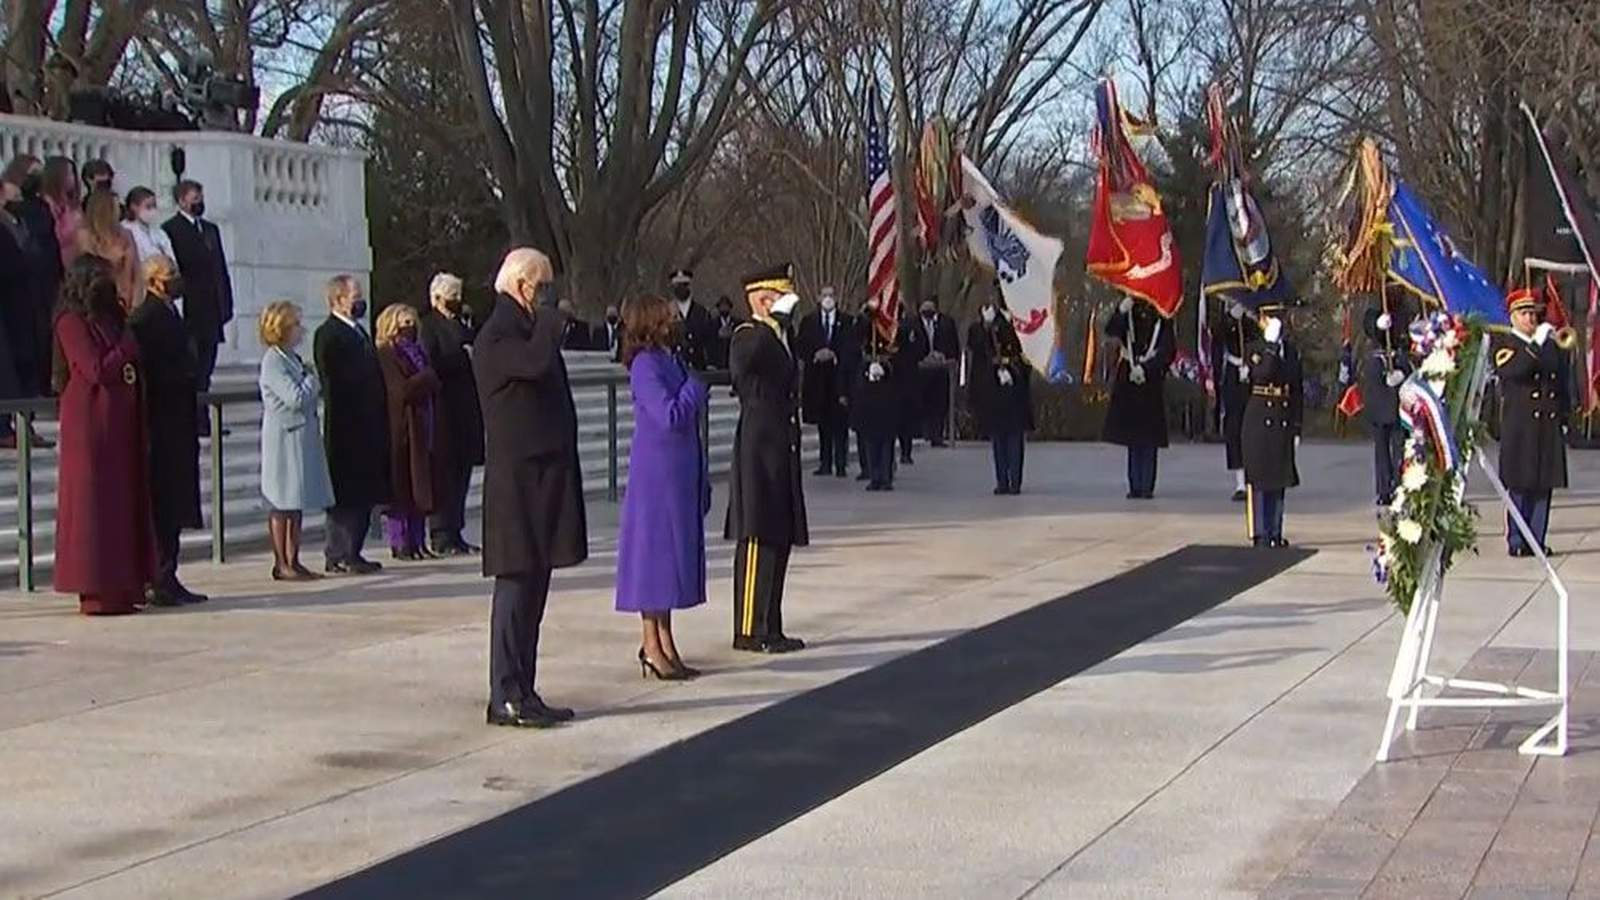 WATCH: President Biden, former presidents lay wreath in Arlington National Cemetery